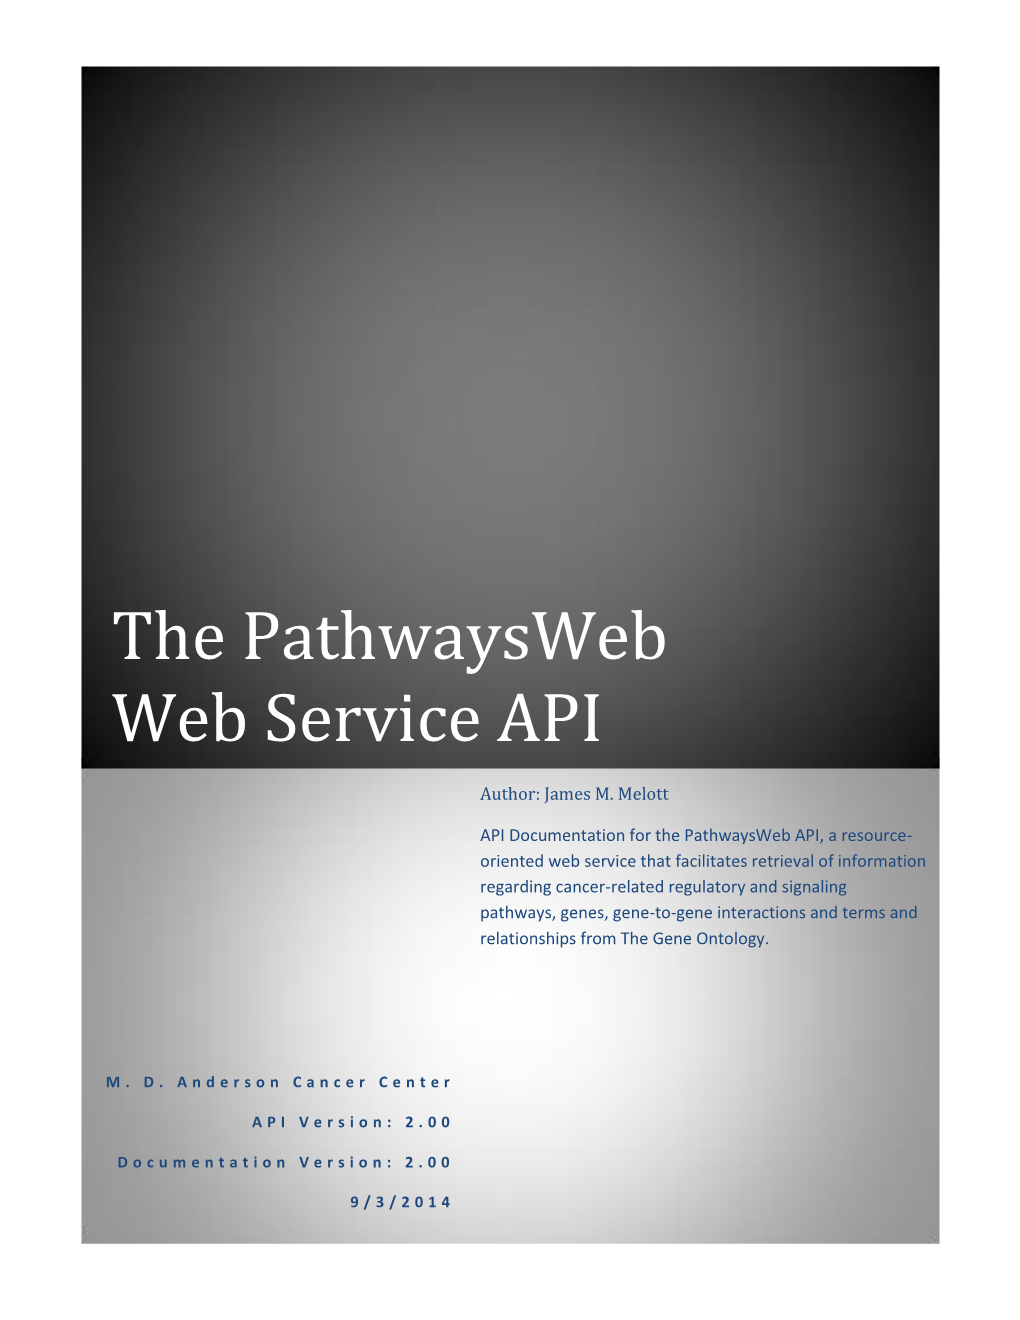 The Pathwaysweb Web Service API